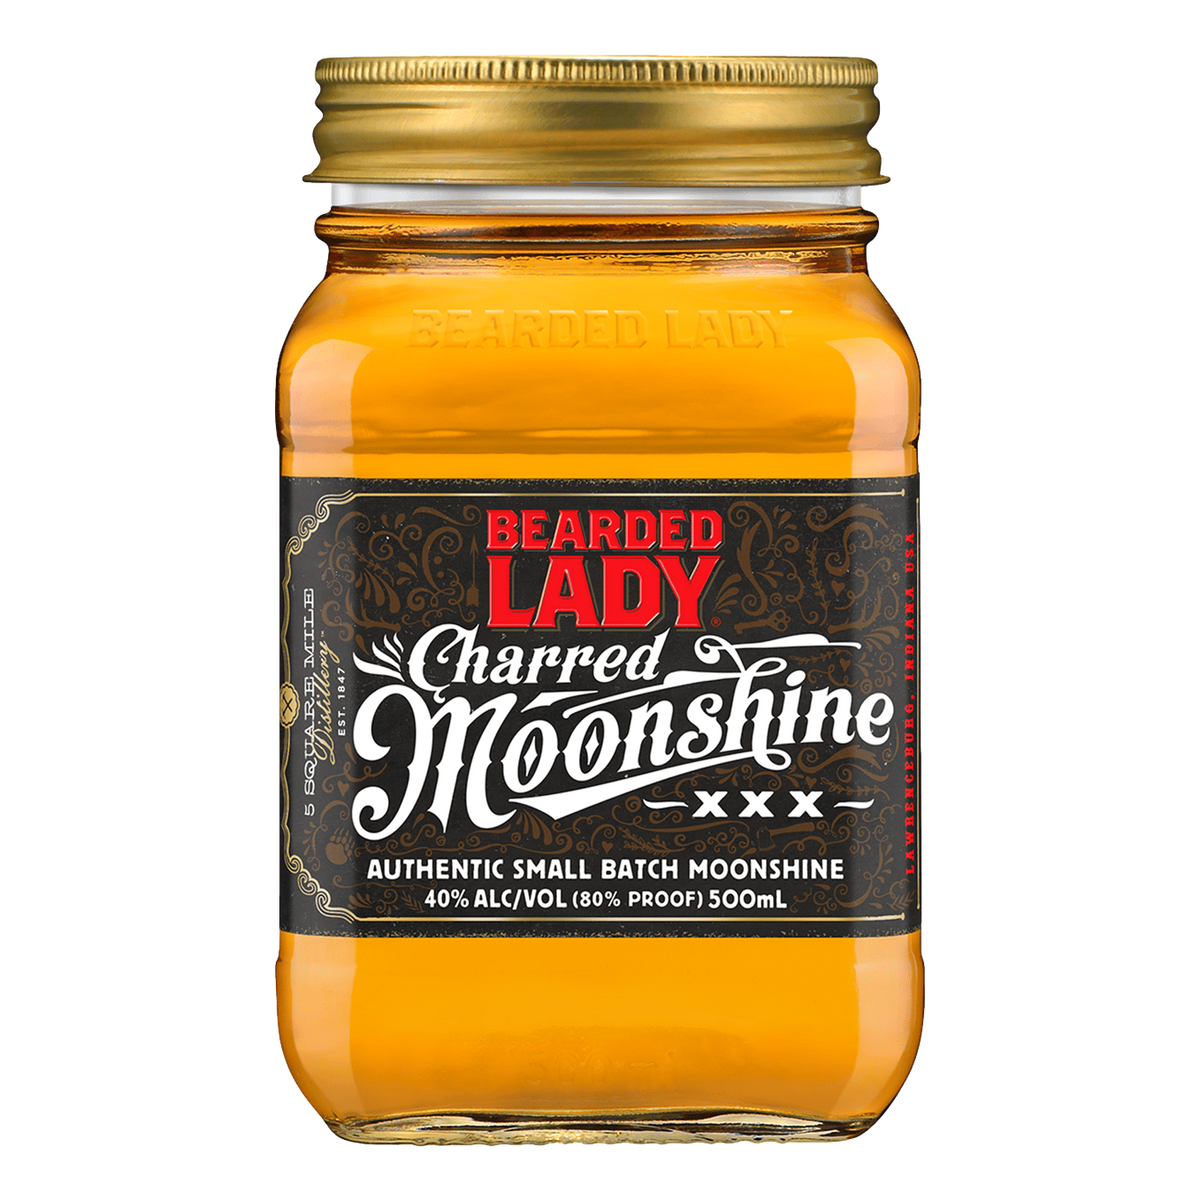 Bearded Lady Charred Moonshine 500ml